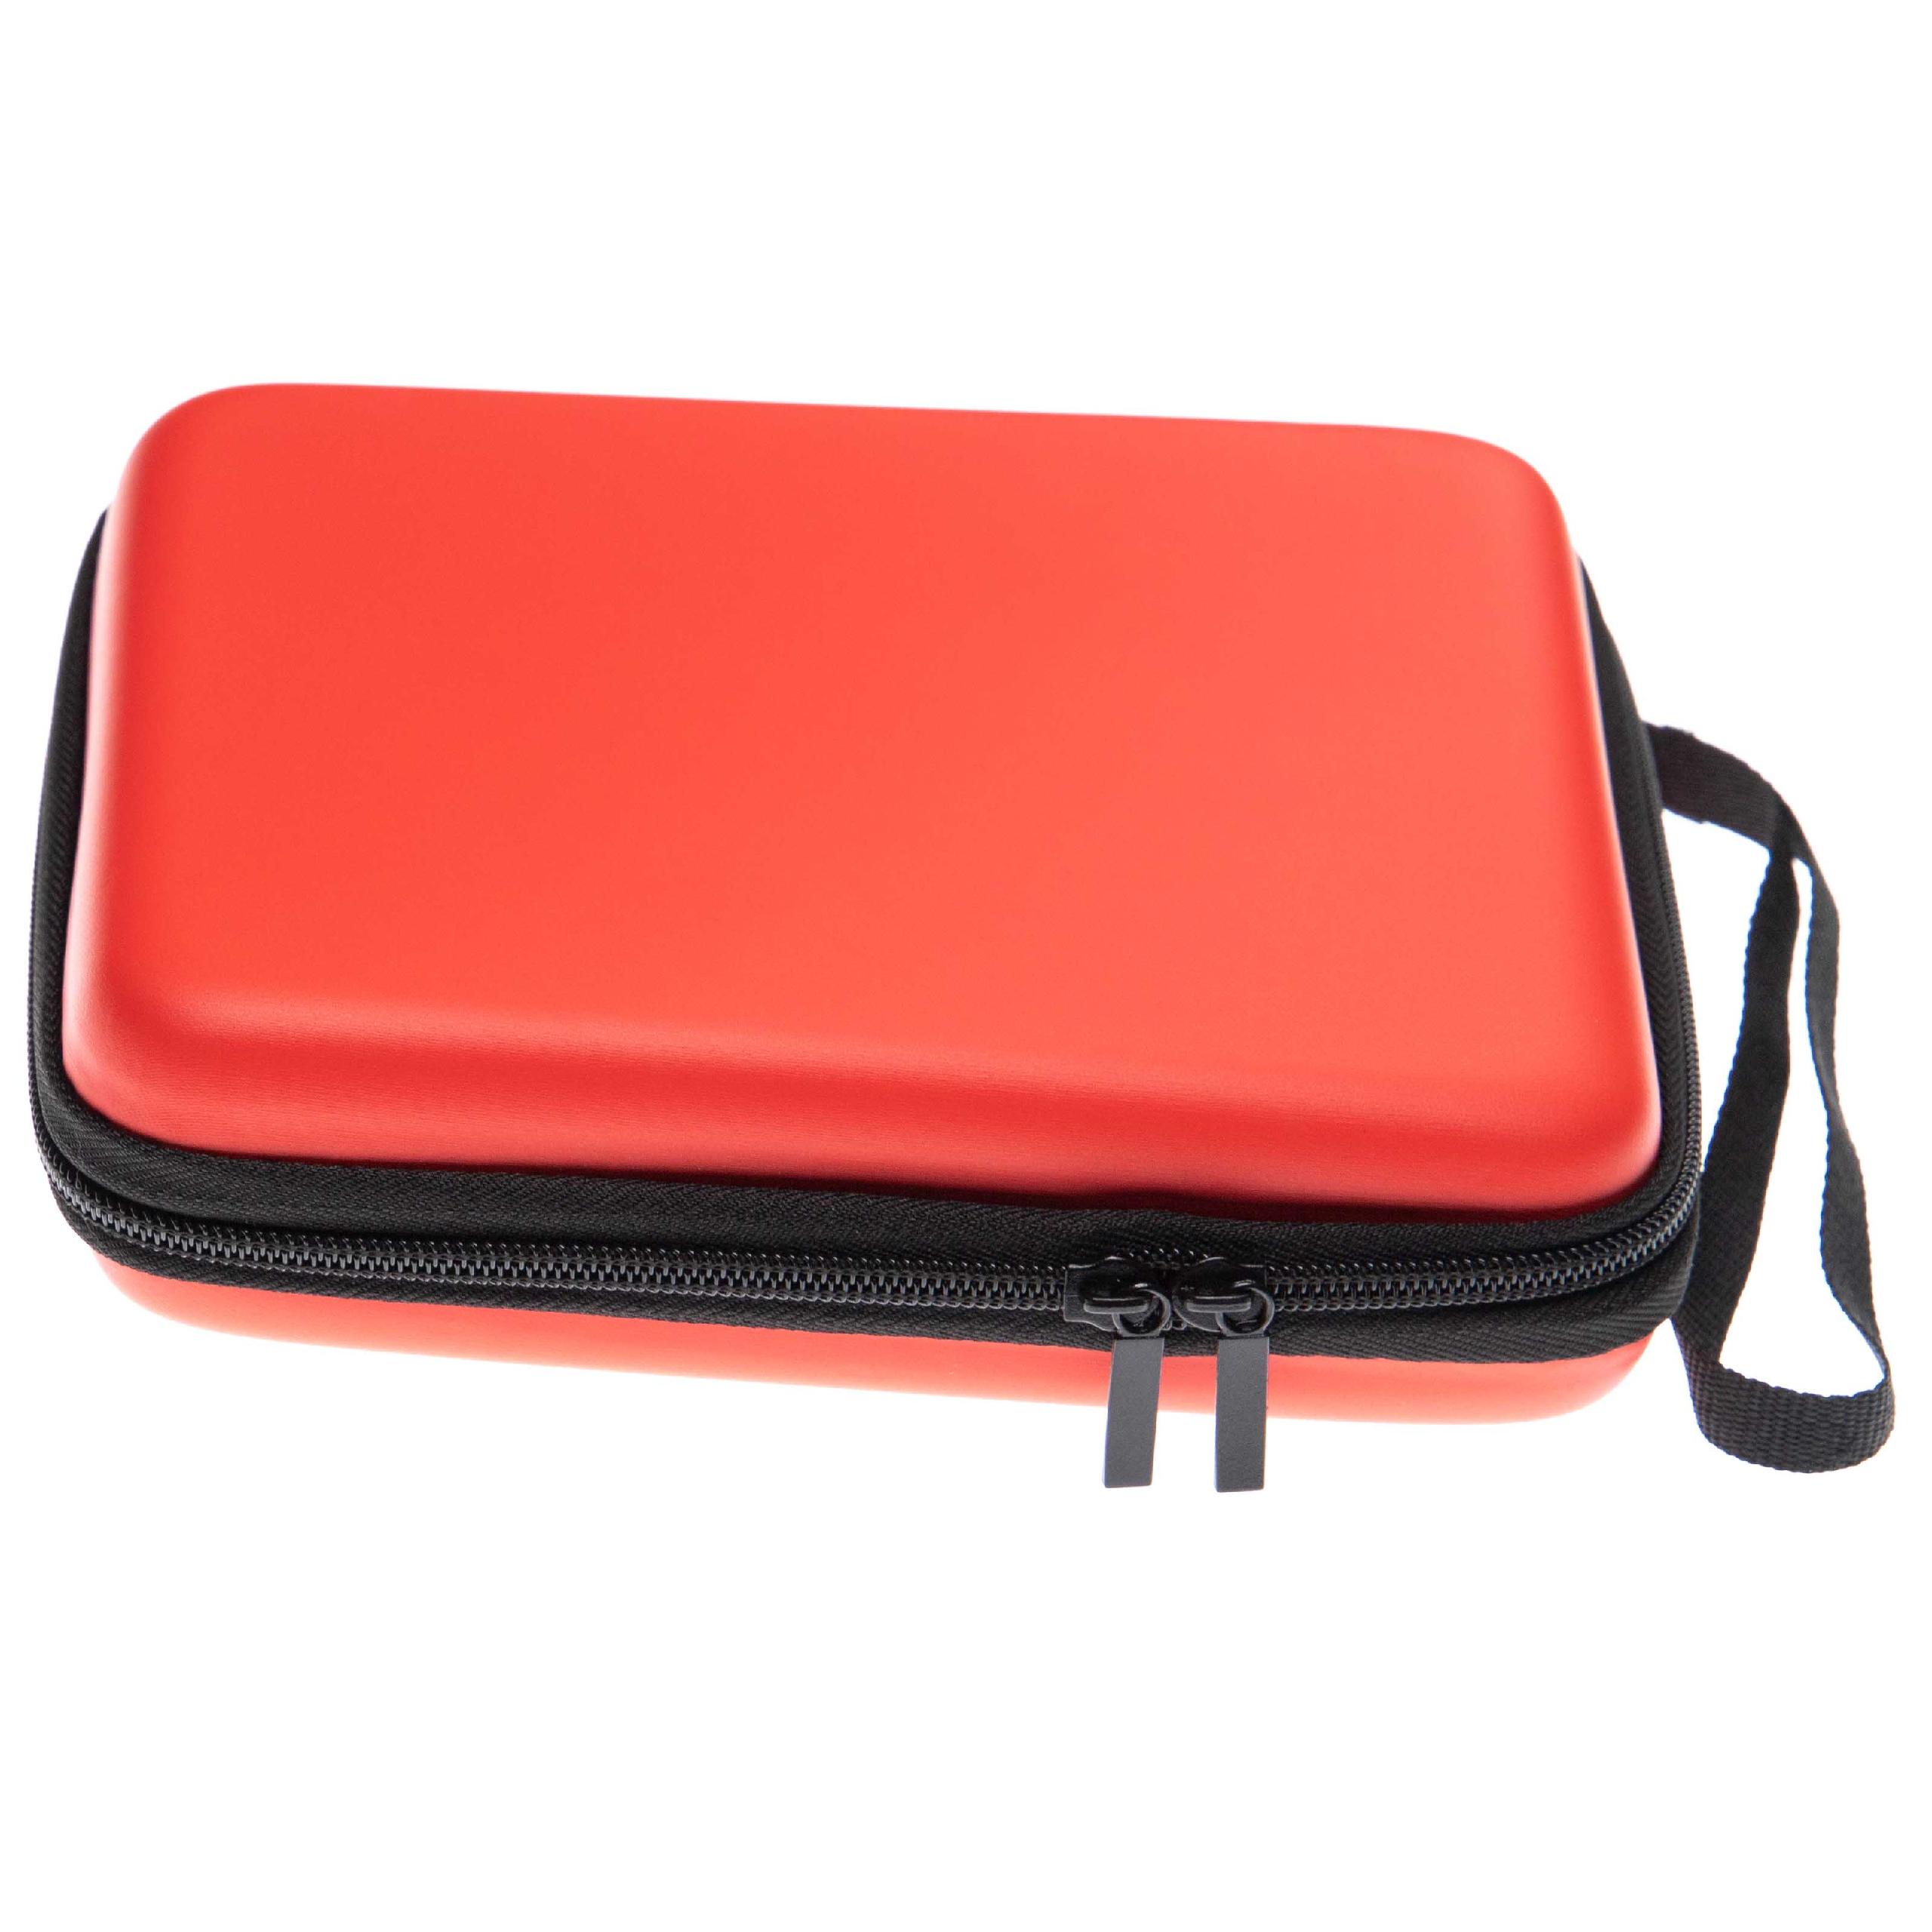 vhbw Bolsa consola de juegos -funda protectora, bolsa de transporte + correa con mosquetón, negro, rojo